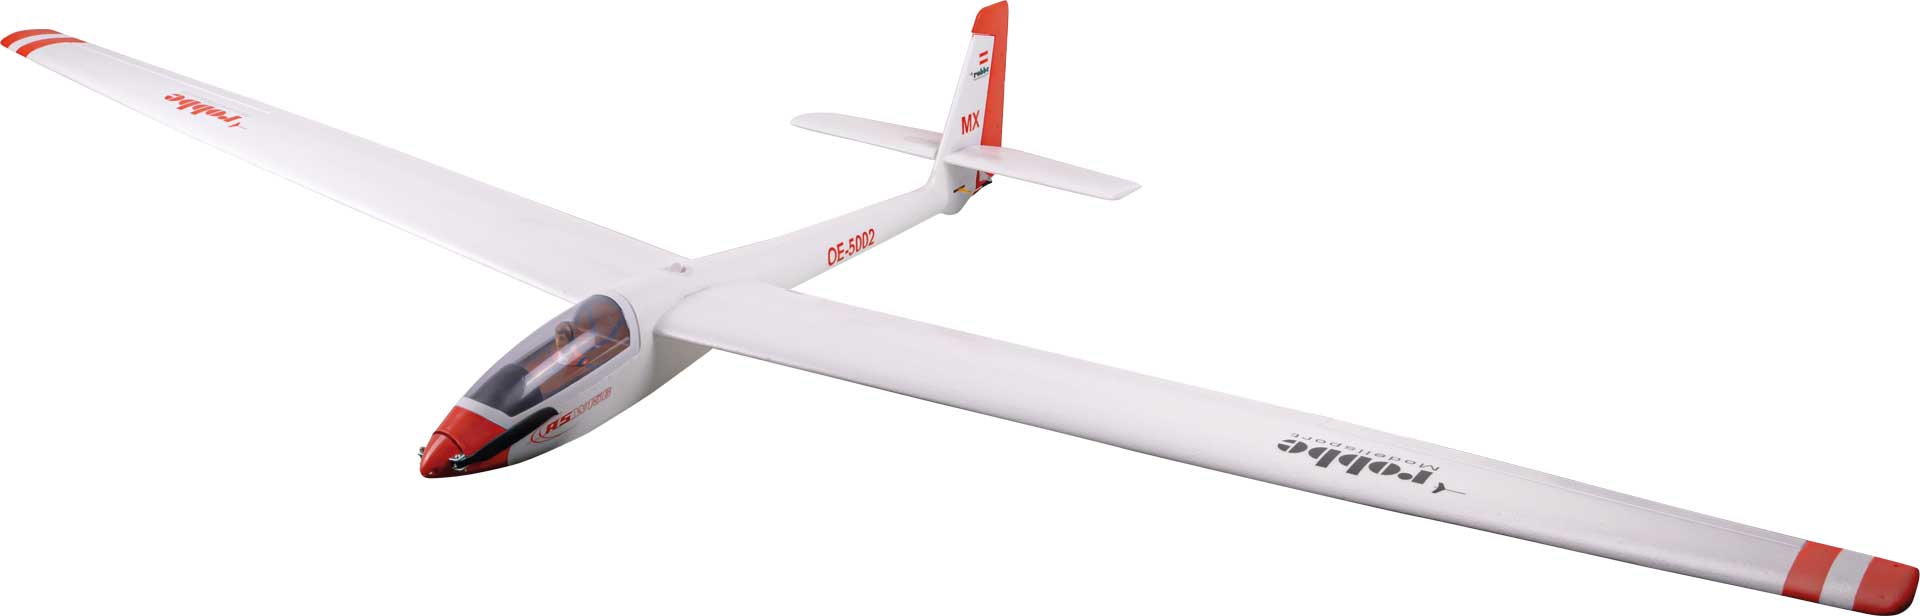 Robbe Modellsport ASW 15b PNP electric glider plane